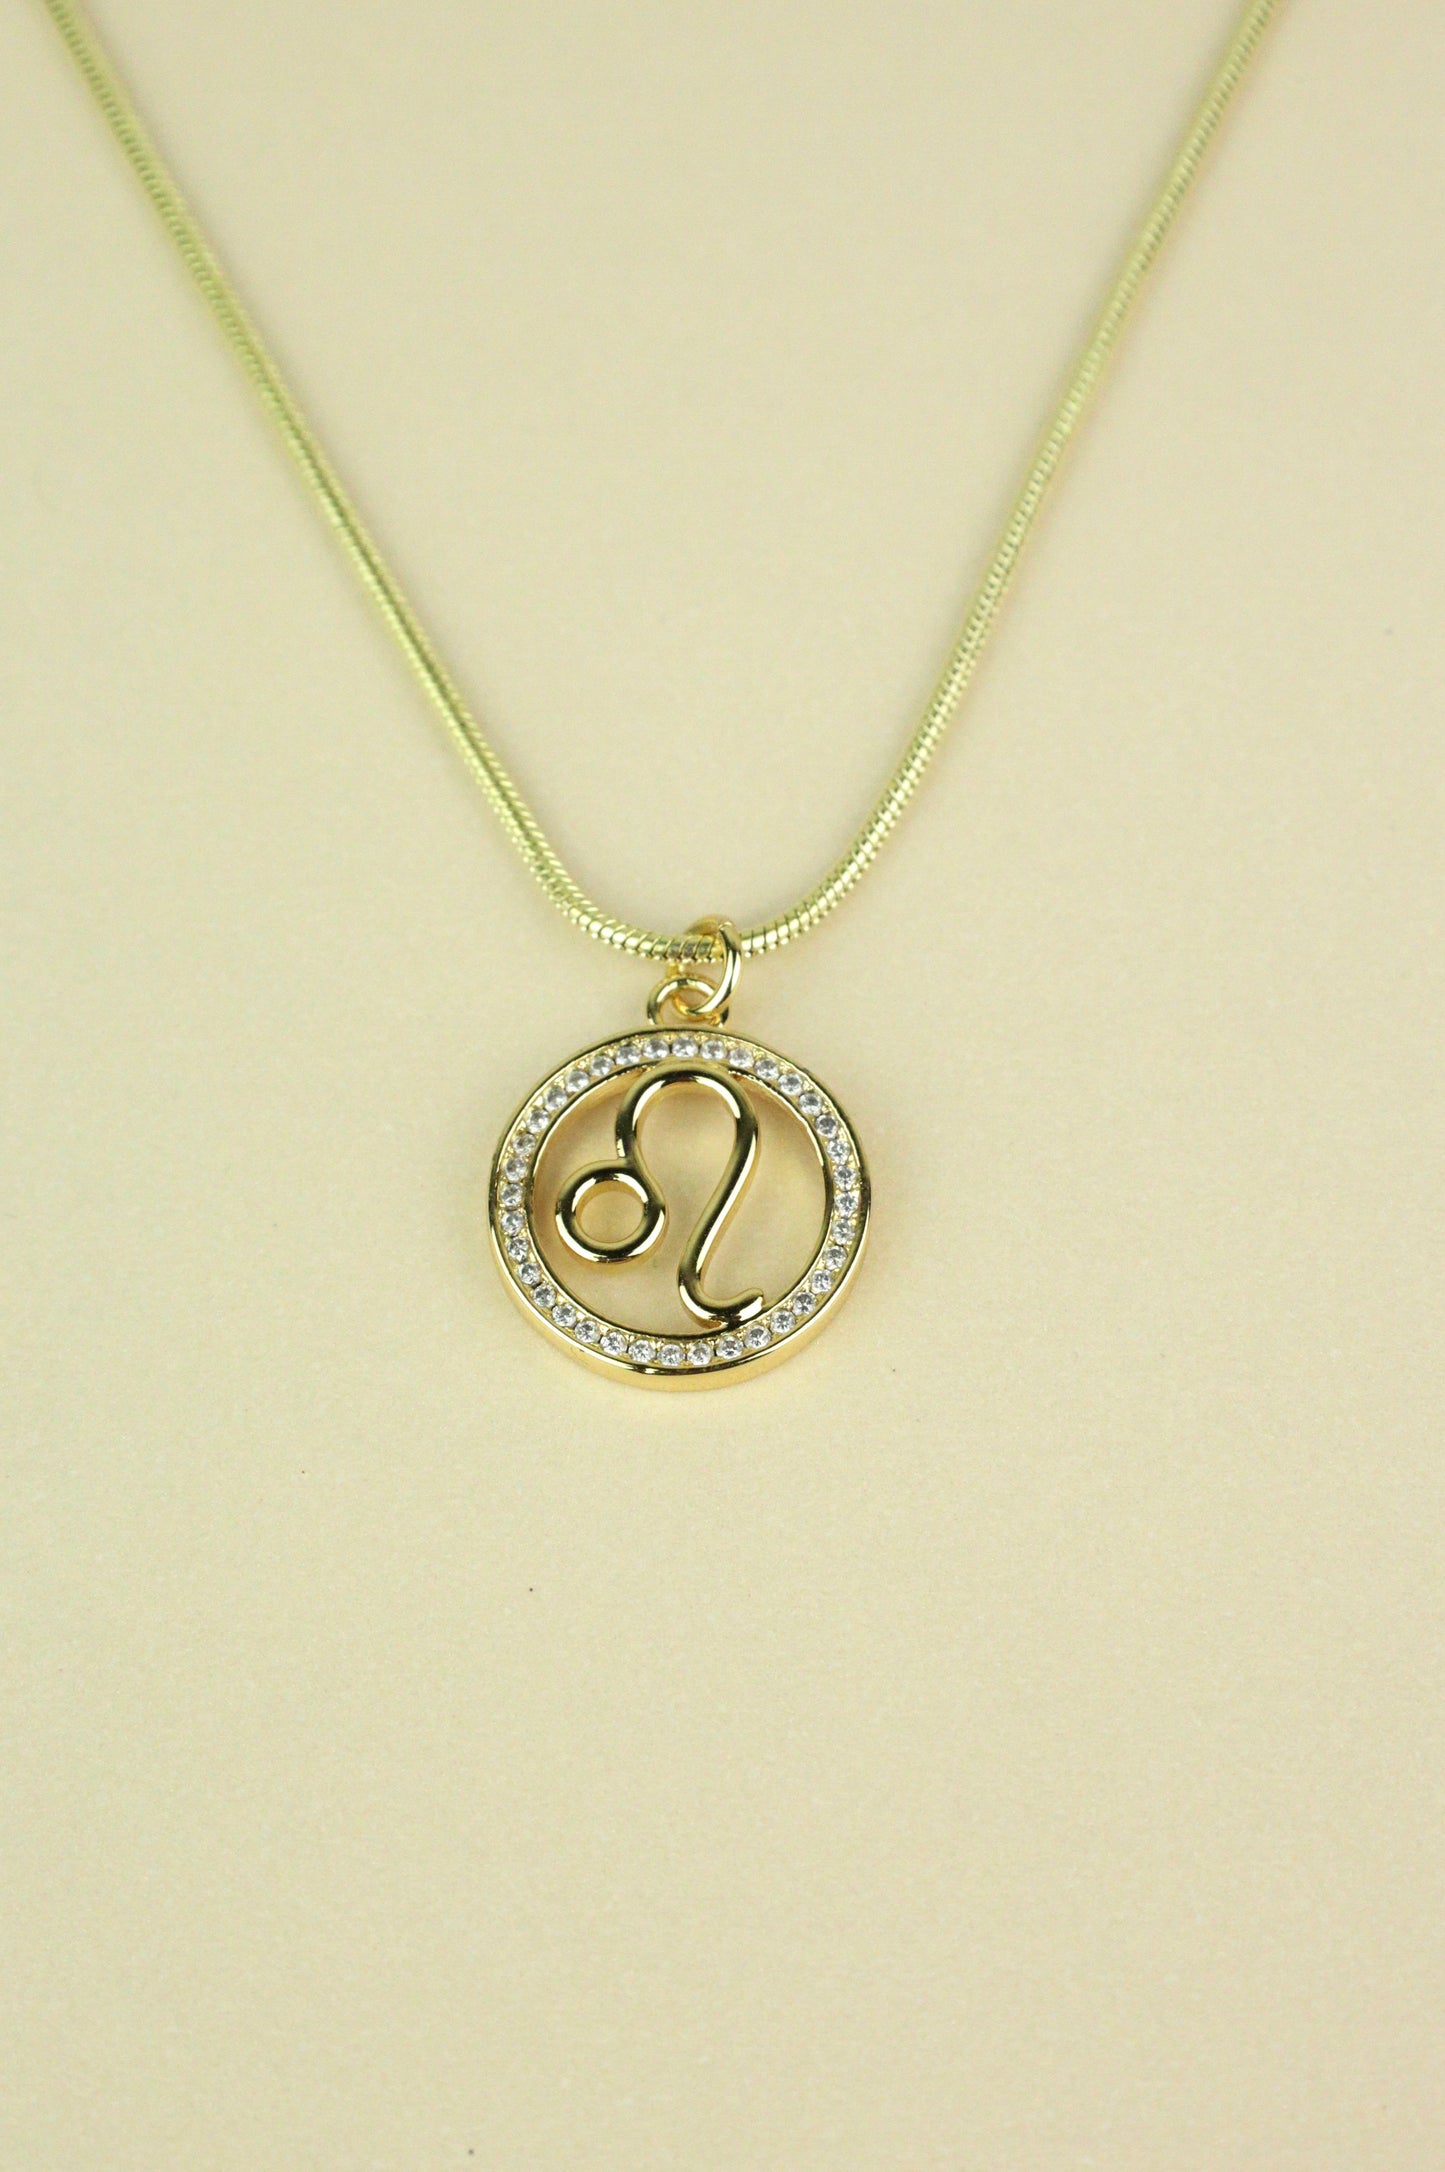 LEO Zodiac necklace in gold